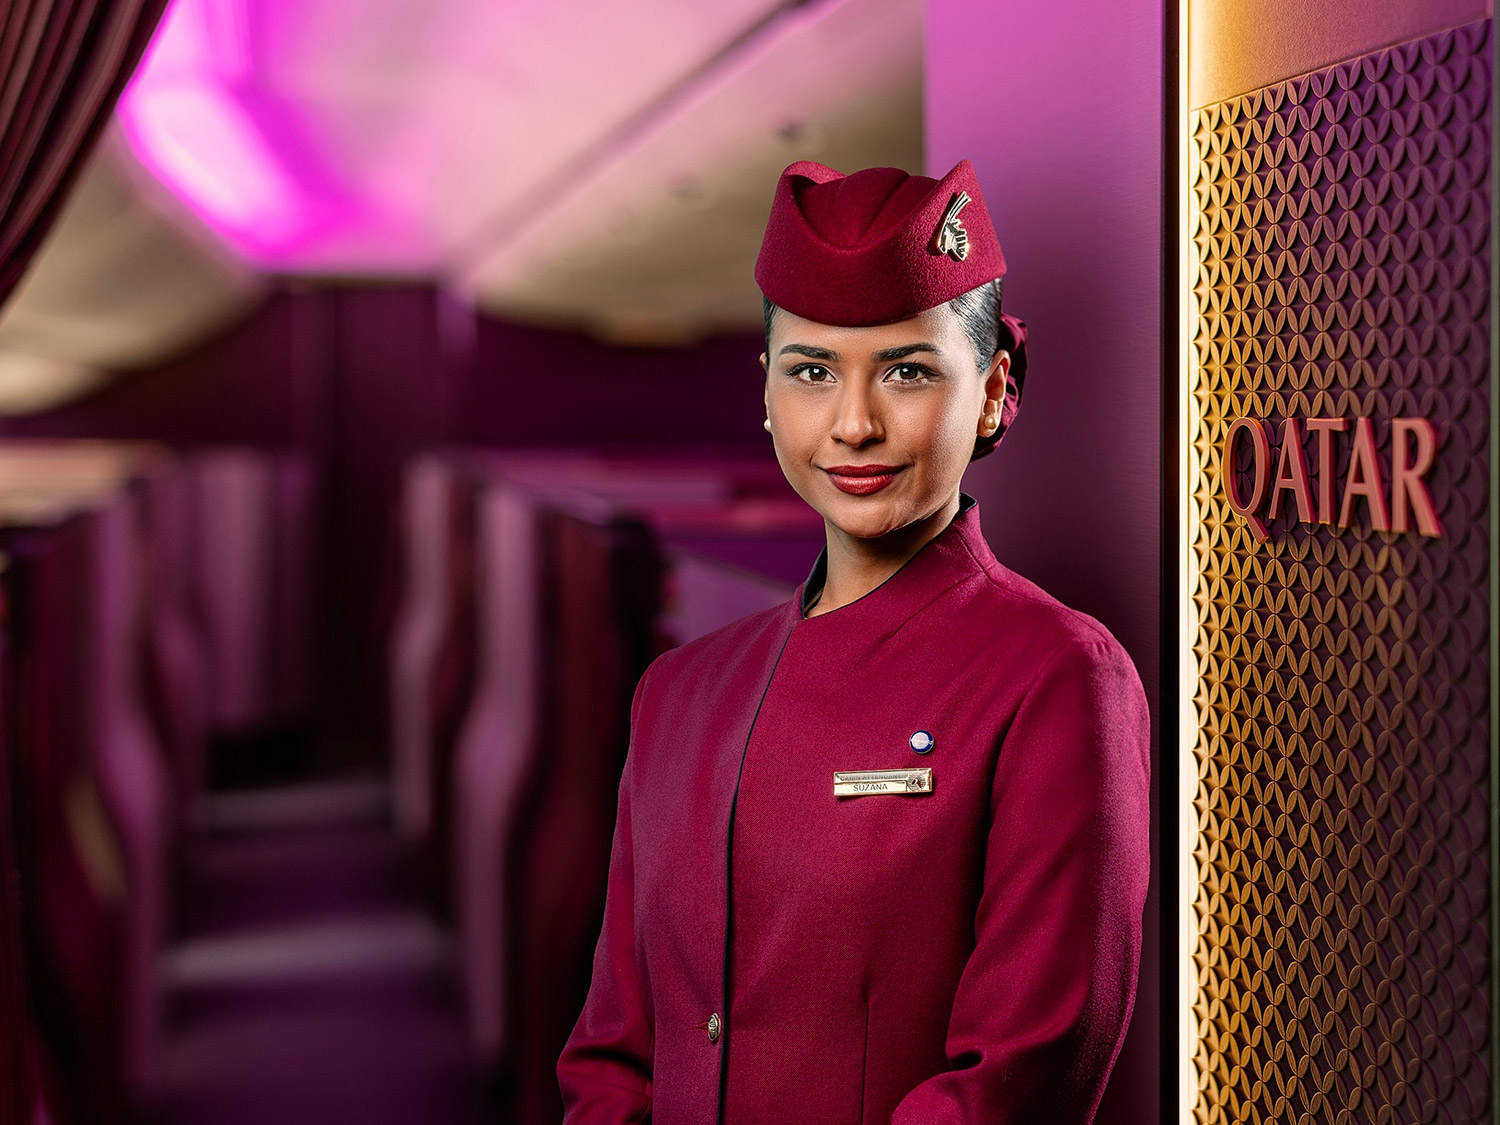 Qatar Airways Female Flight Attendant.